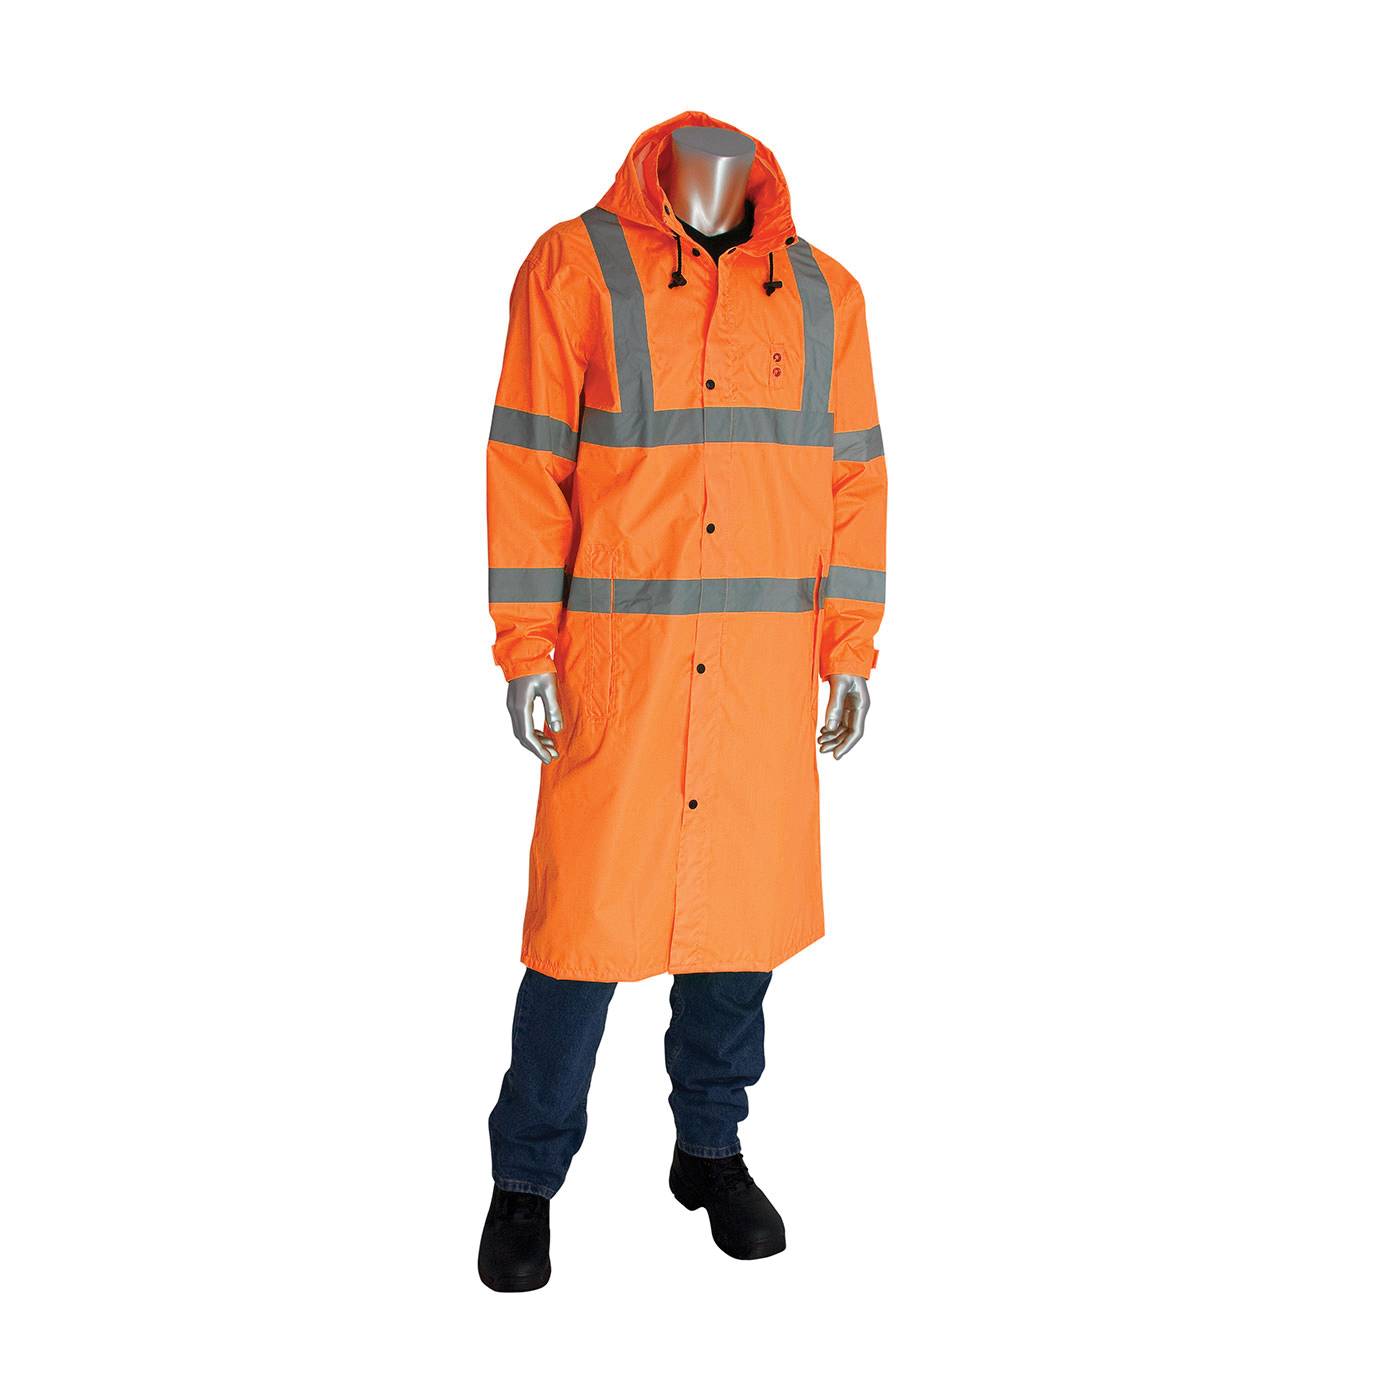 PIP® FALCON™ Viz™ 353-1048-OR/5X All Purpose Waterproof Rain Coat, 5XL, Hi-Viz Orange, 150D Polyester Coated with Polyurethane, Resists: Water, ANSI 107 Type R Class 3, Concealed Hood